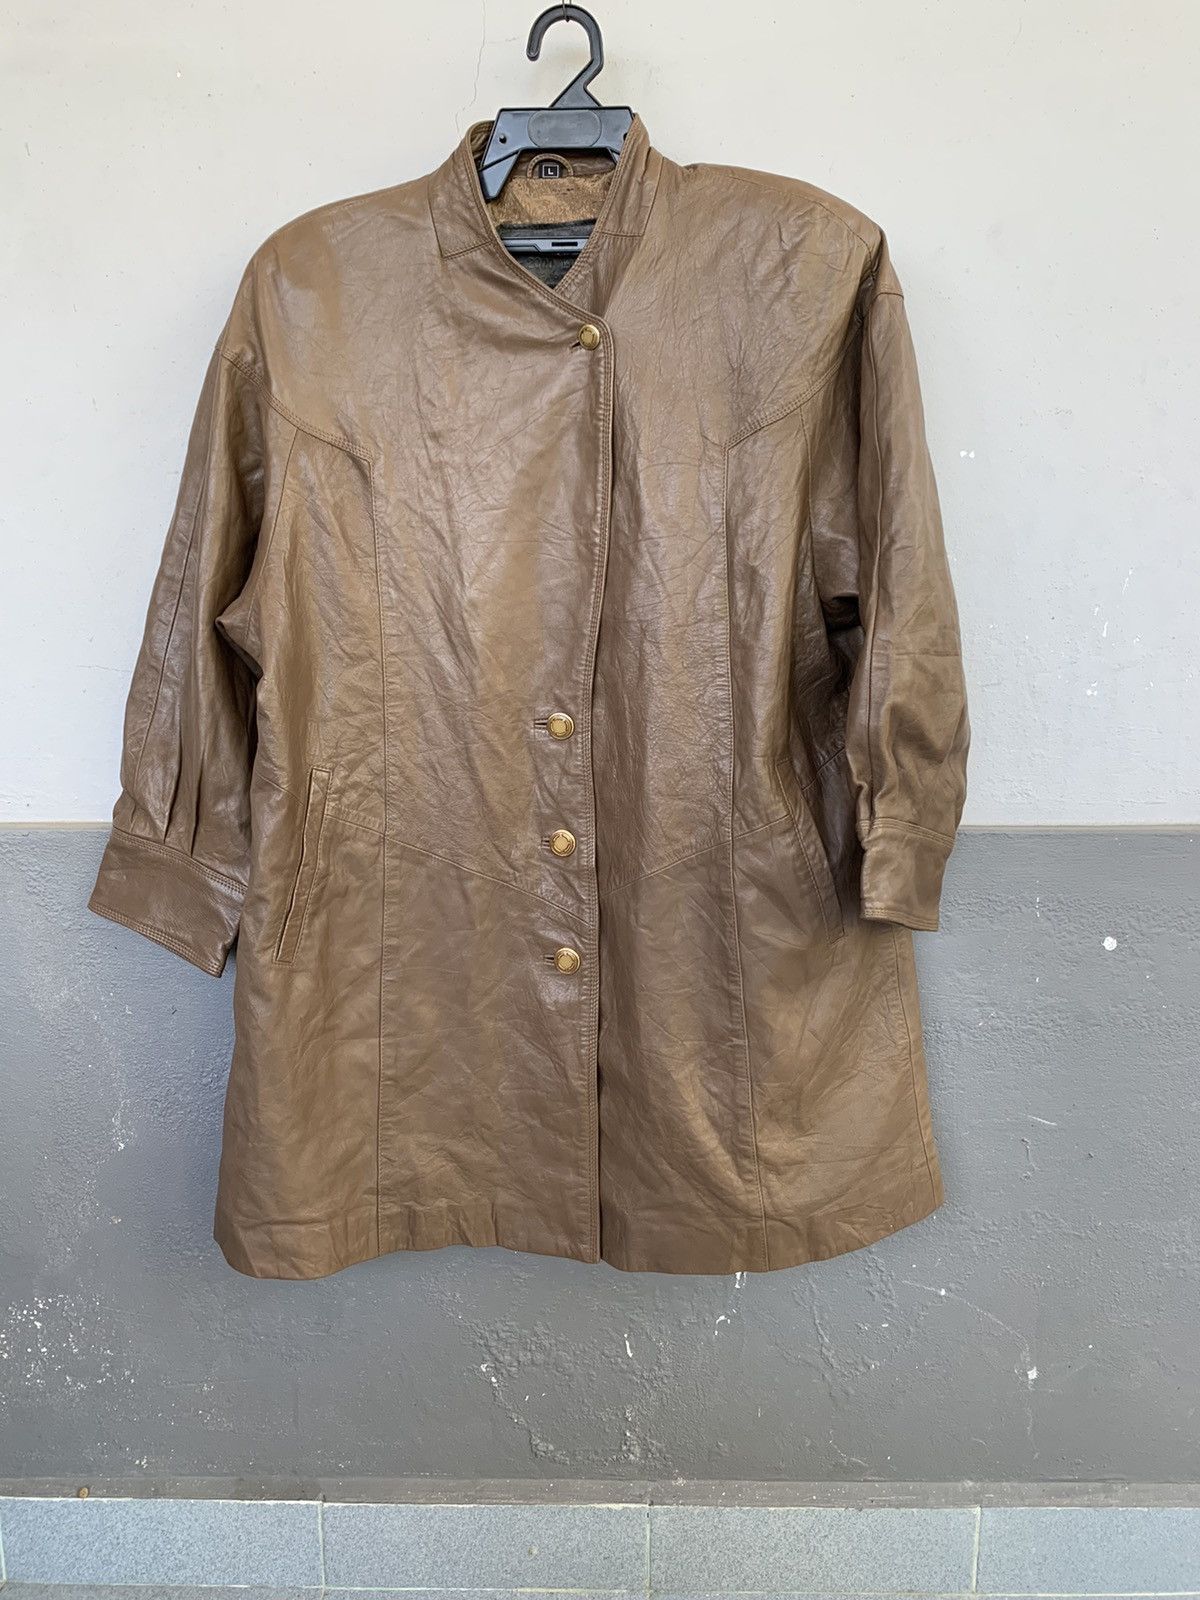 Futura 2000 Futura 2000 Ex Tokyo Fur Leather Long Jacket Size US L / EU 52-54 / 3 - 8 Thumbnail